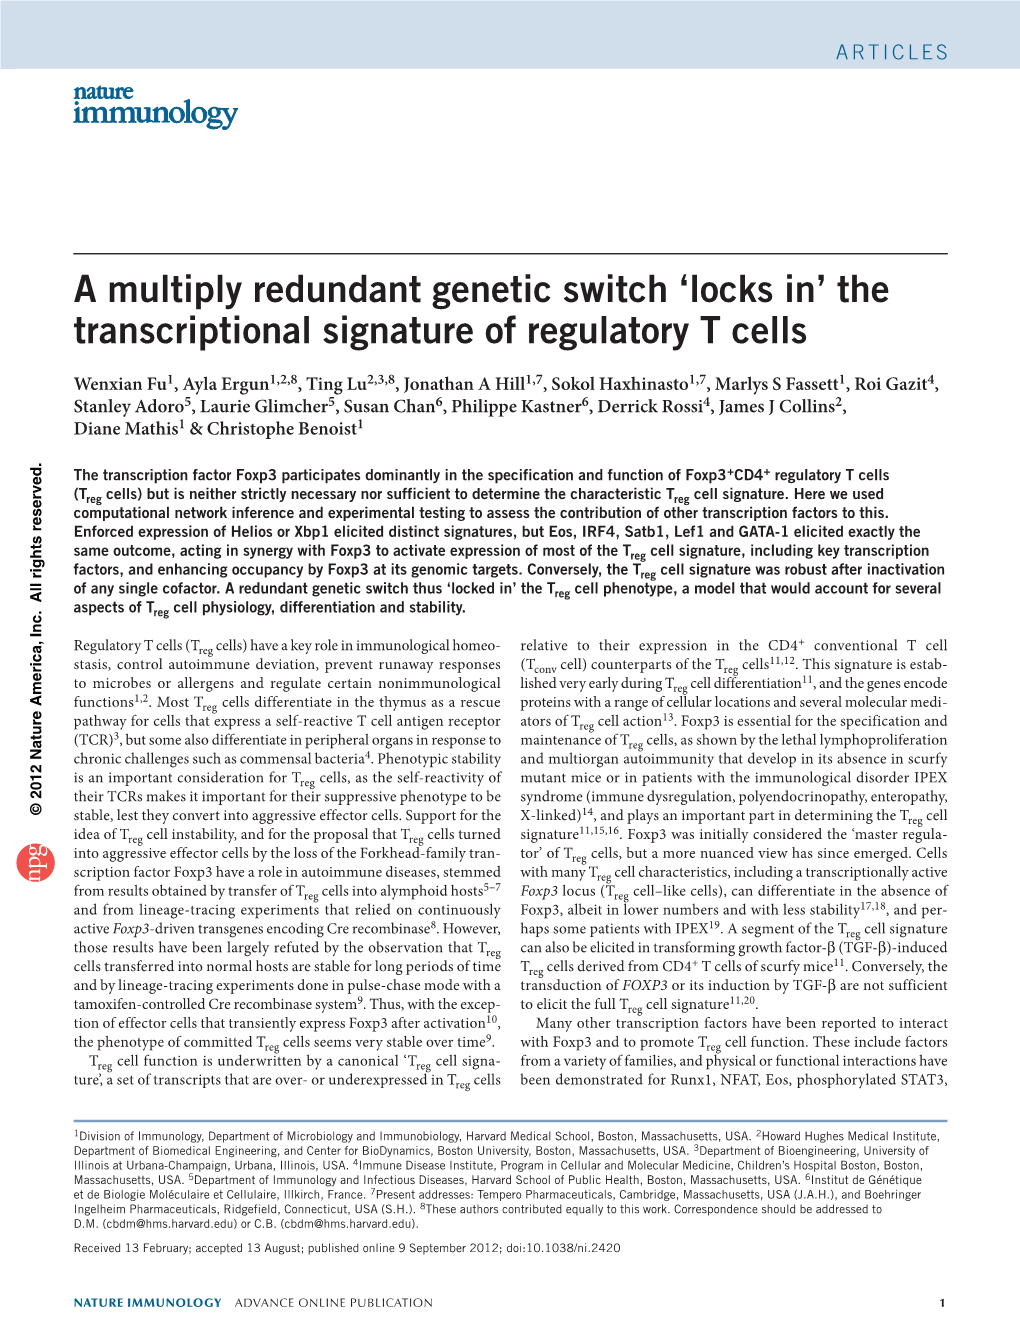 The Transcriptional Signature of Regulatory T Cells